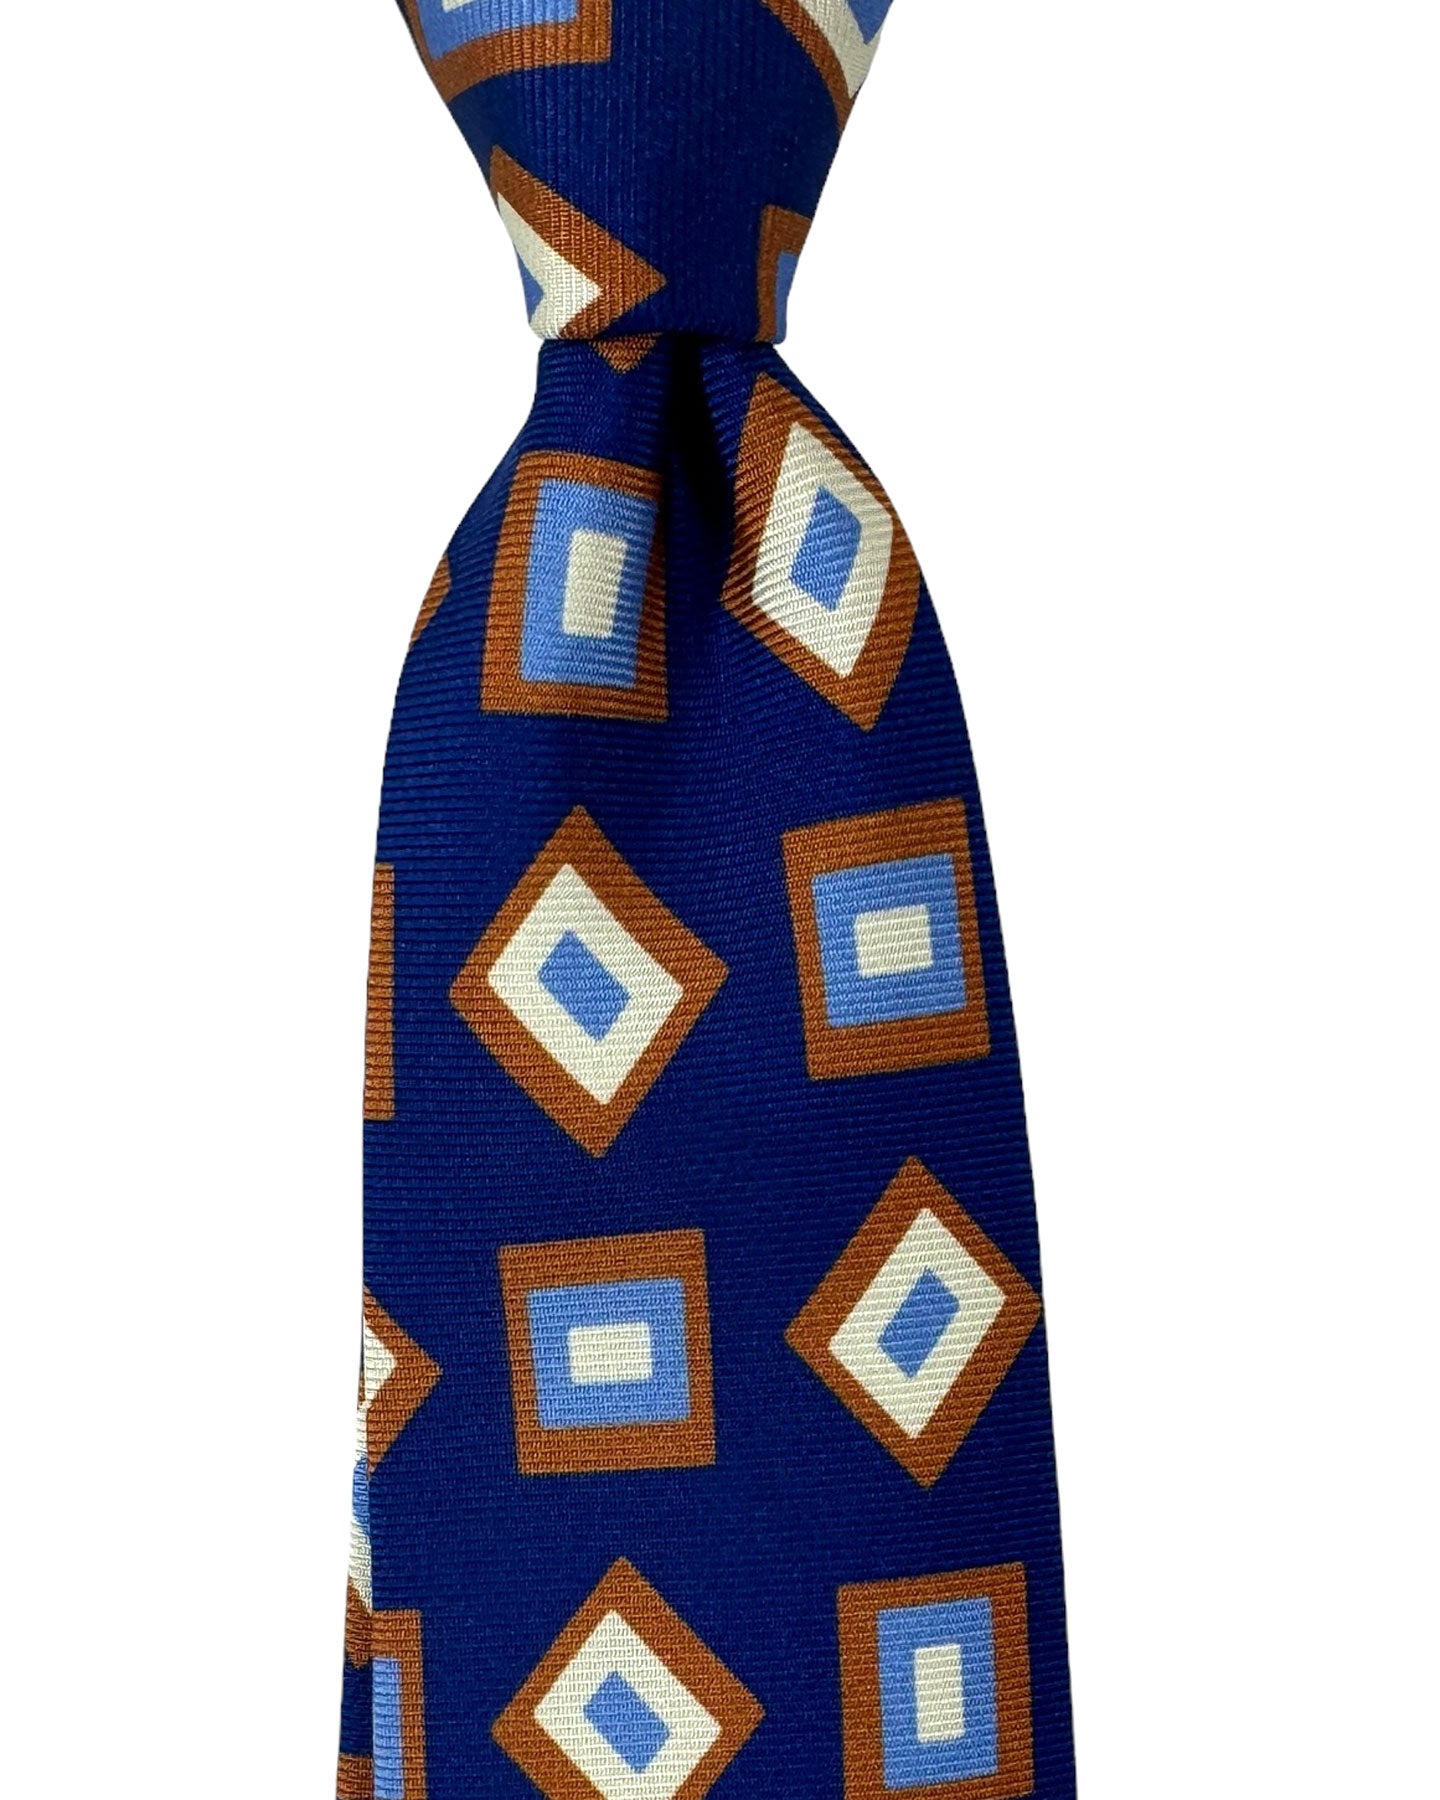 Barba Sevenfold Tie Royal Blue Rust Orange Geometric Design - Sartorial Neckwear